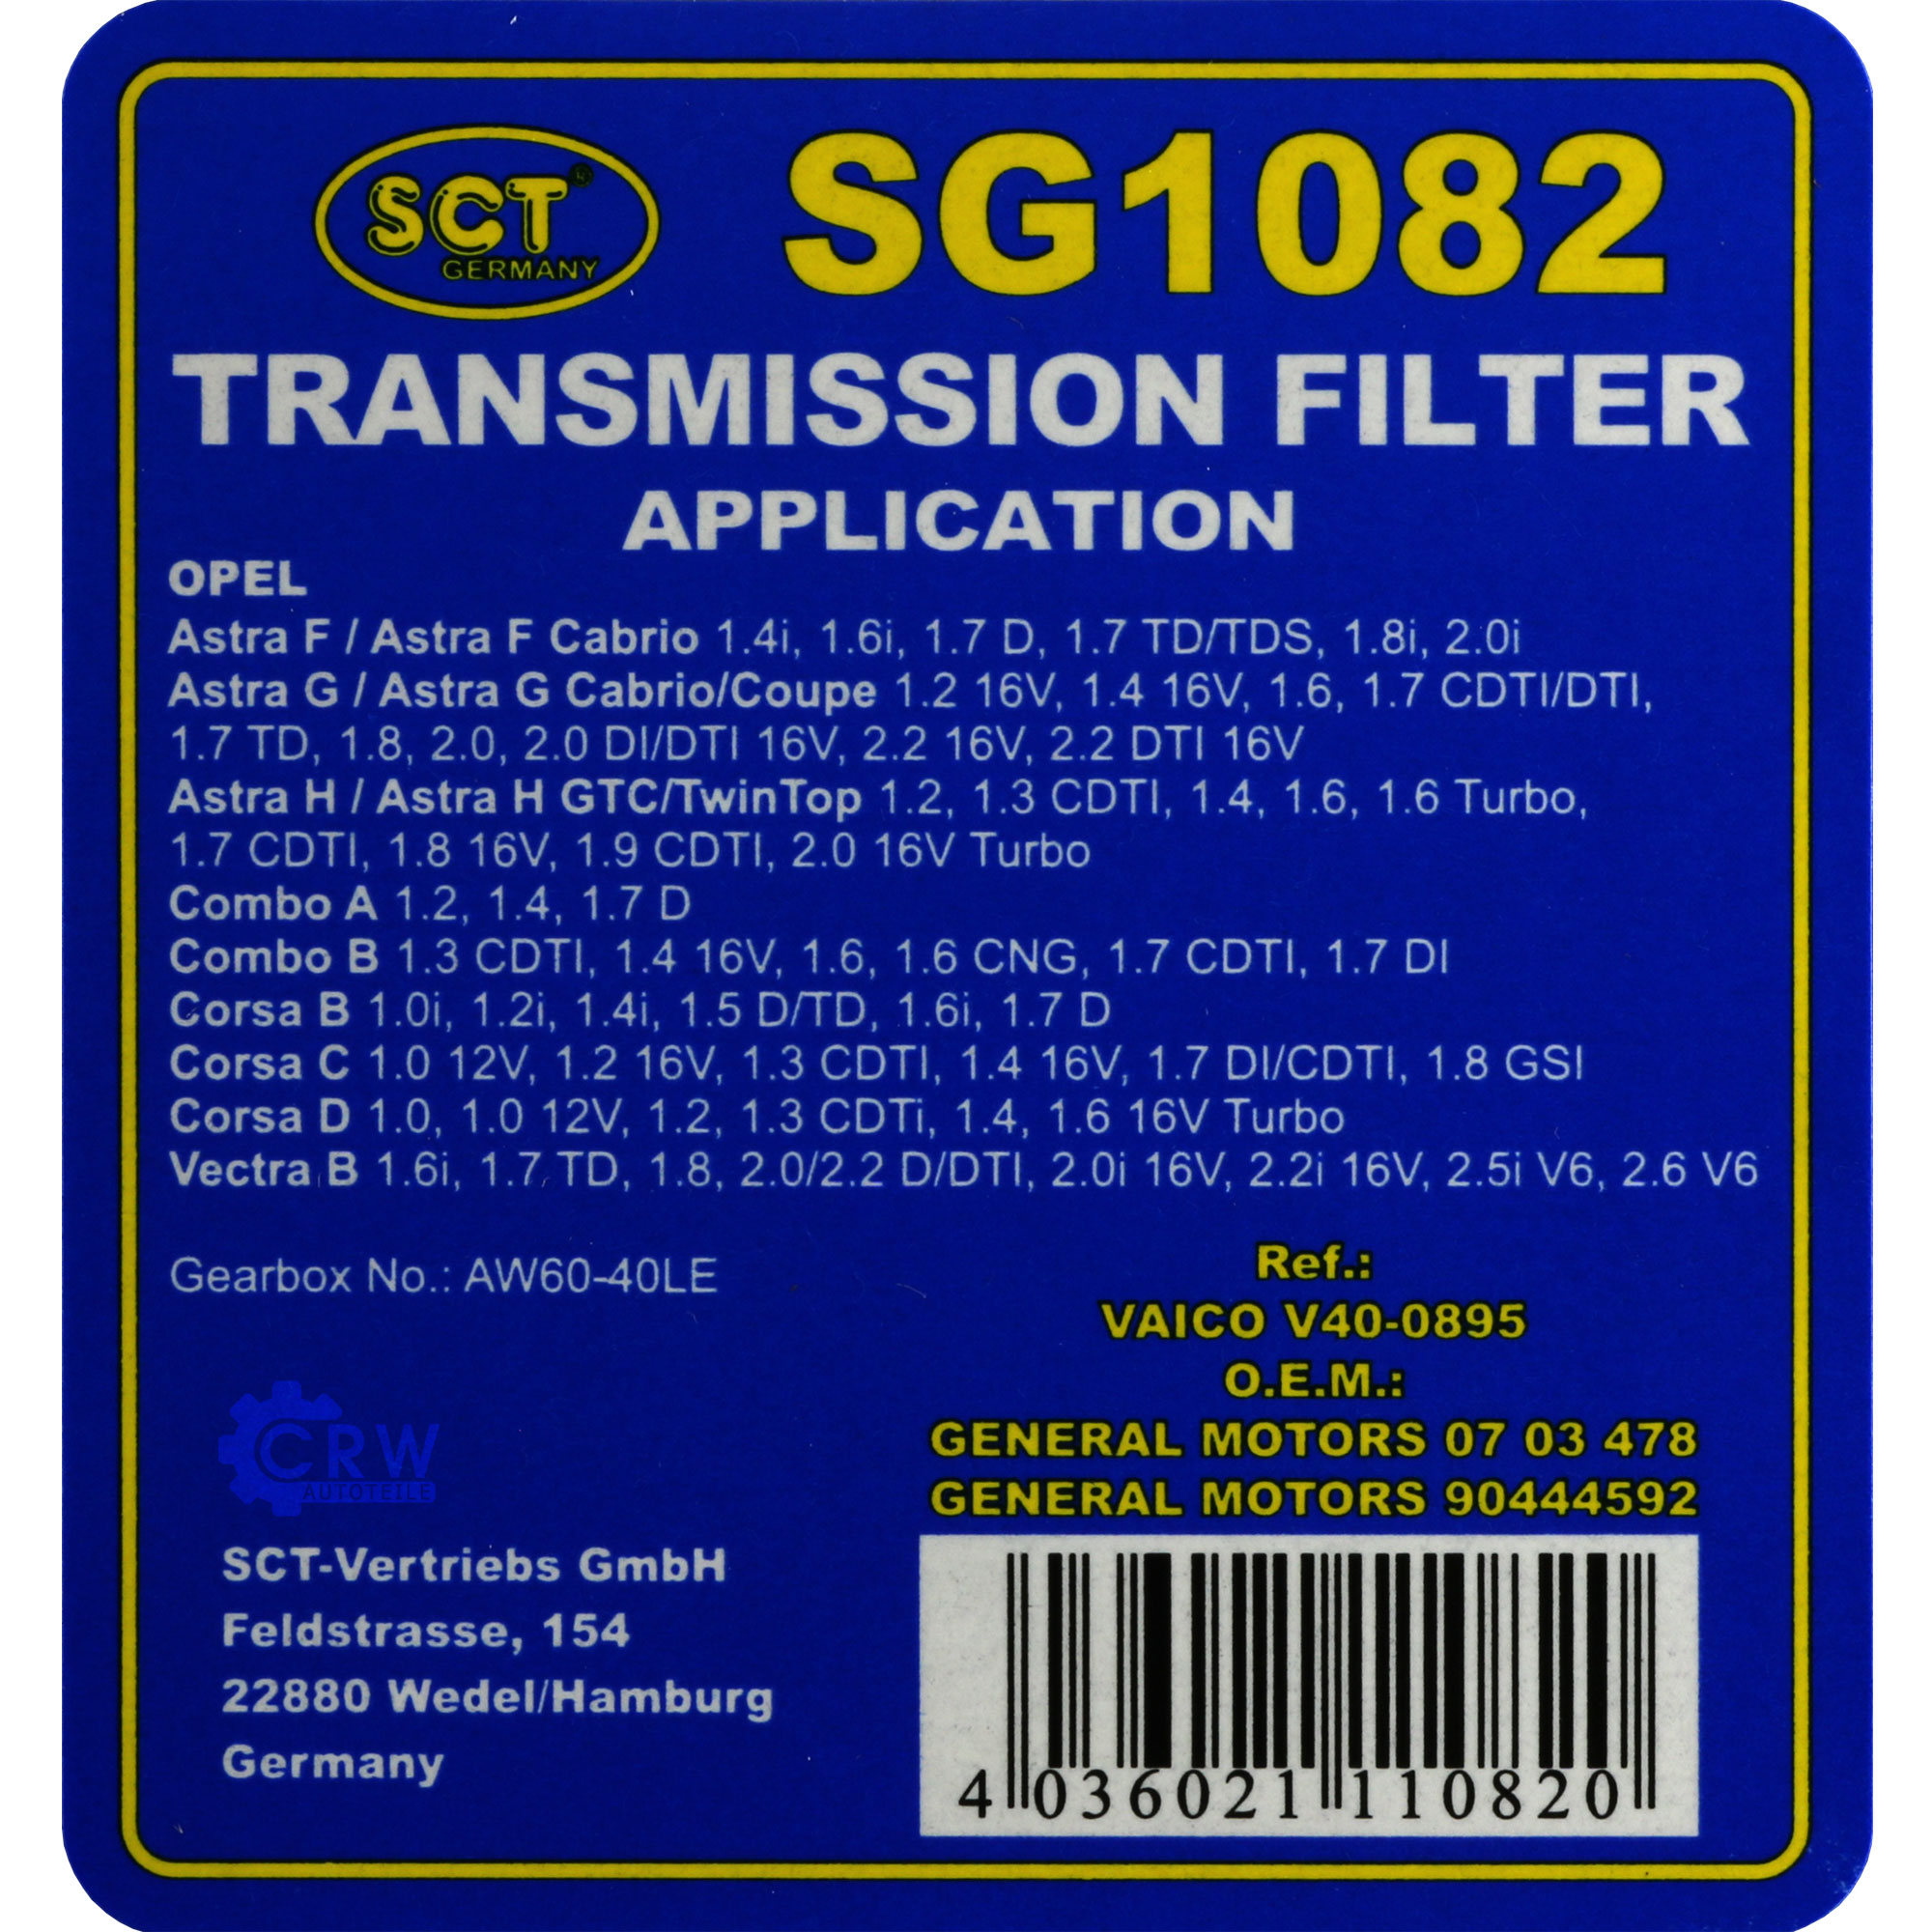 SCT Getriebeölfilter Filter SG 1082 für Automatikgetriebe ATF